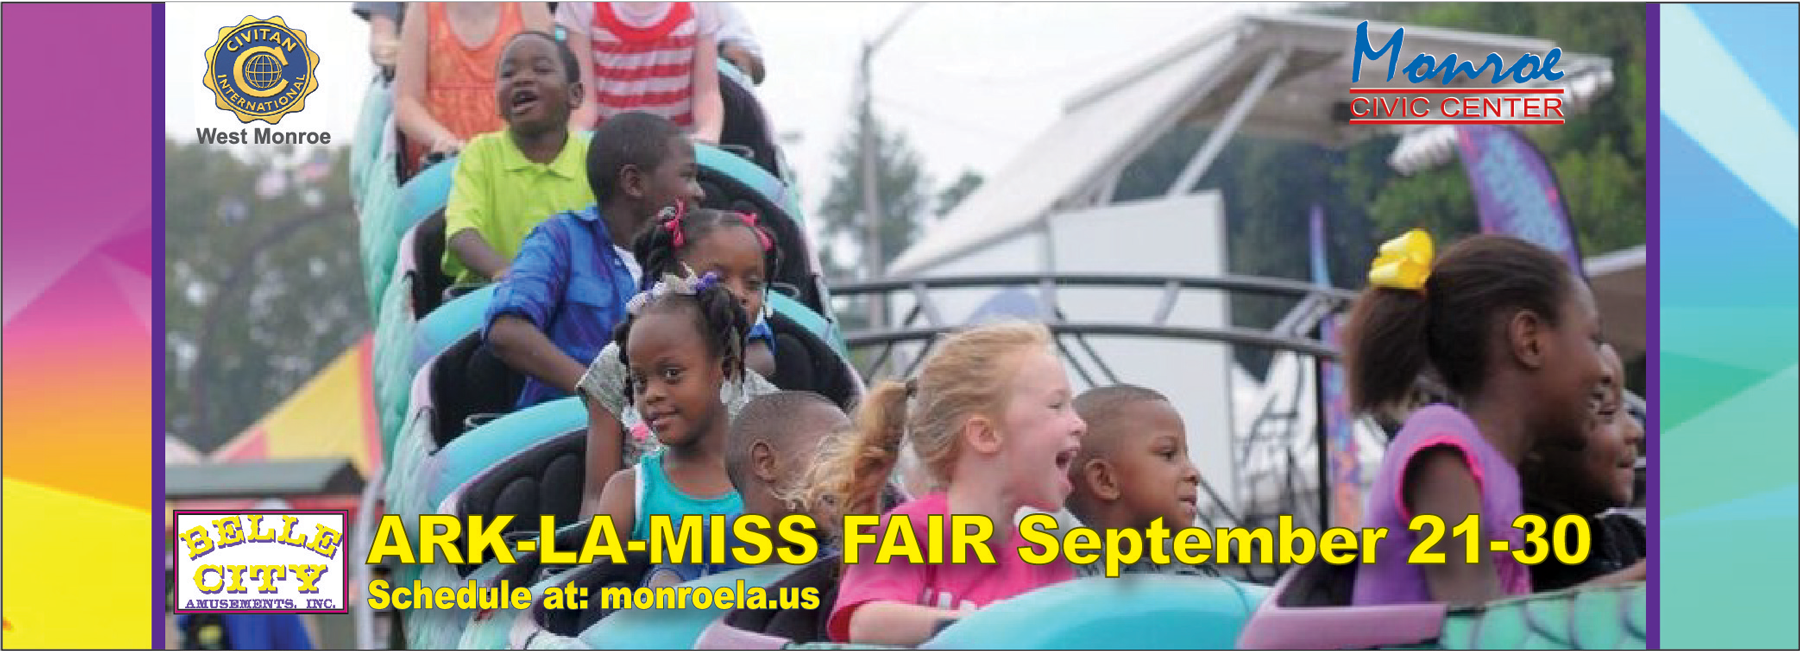 2018 ARK-LA-MISS Fair | City of Monroe, Louisiana